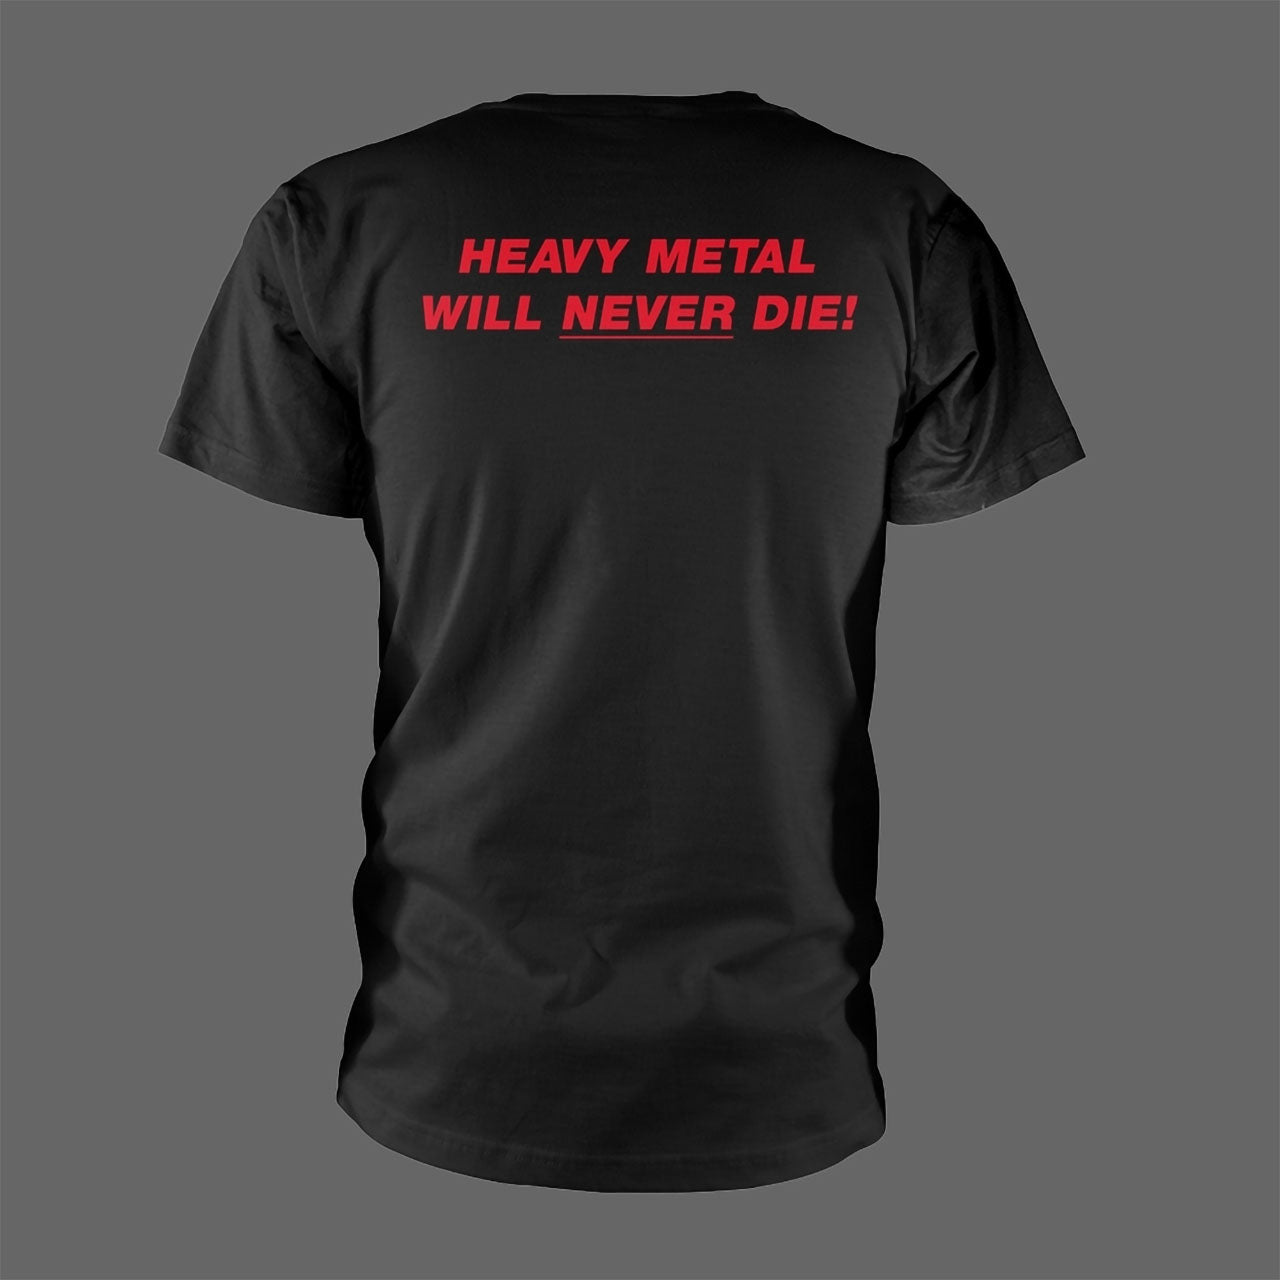 Metal Blade Records - Old School Reaper (T-Shirt)